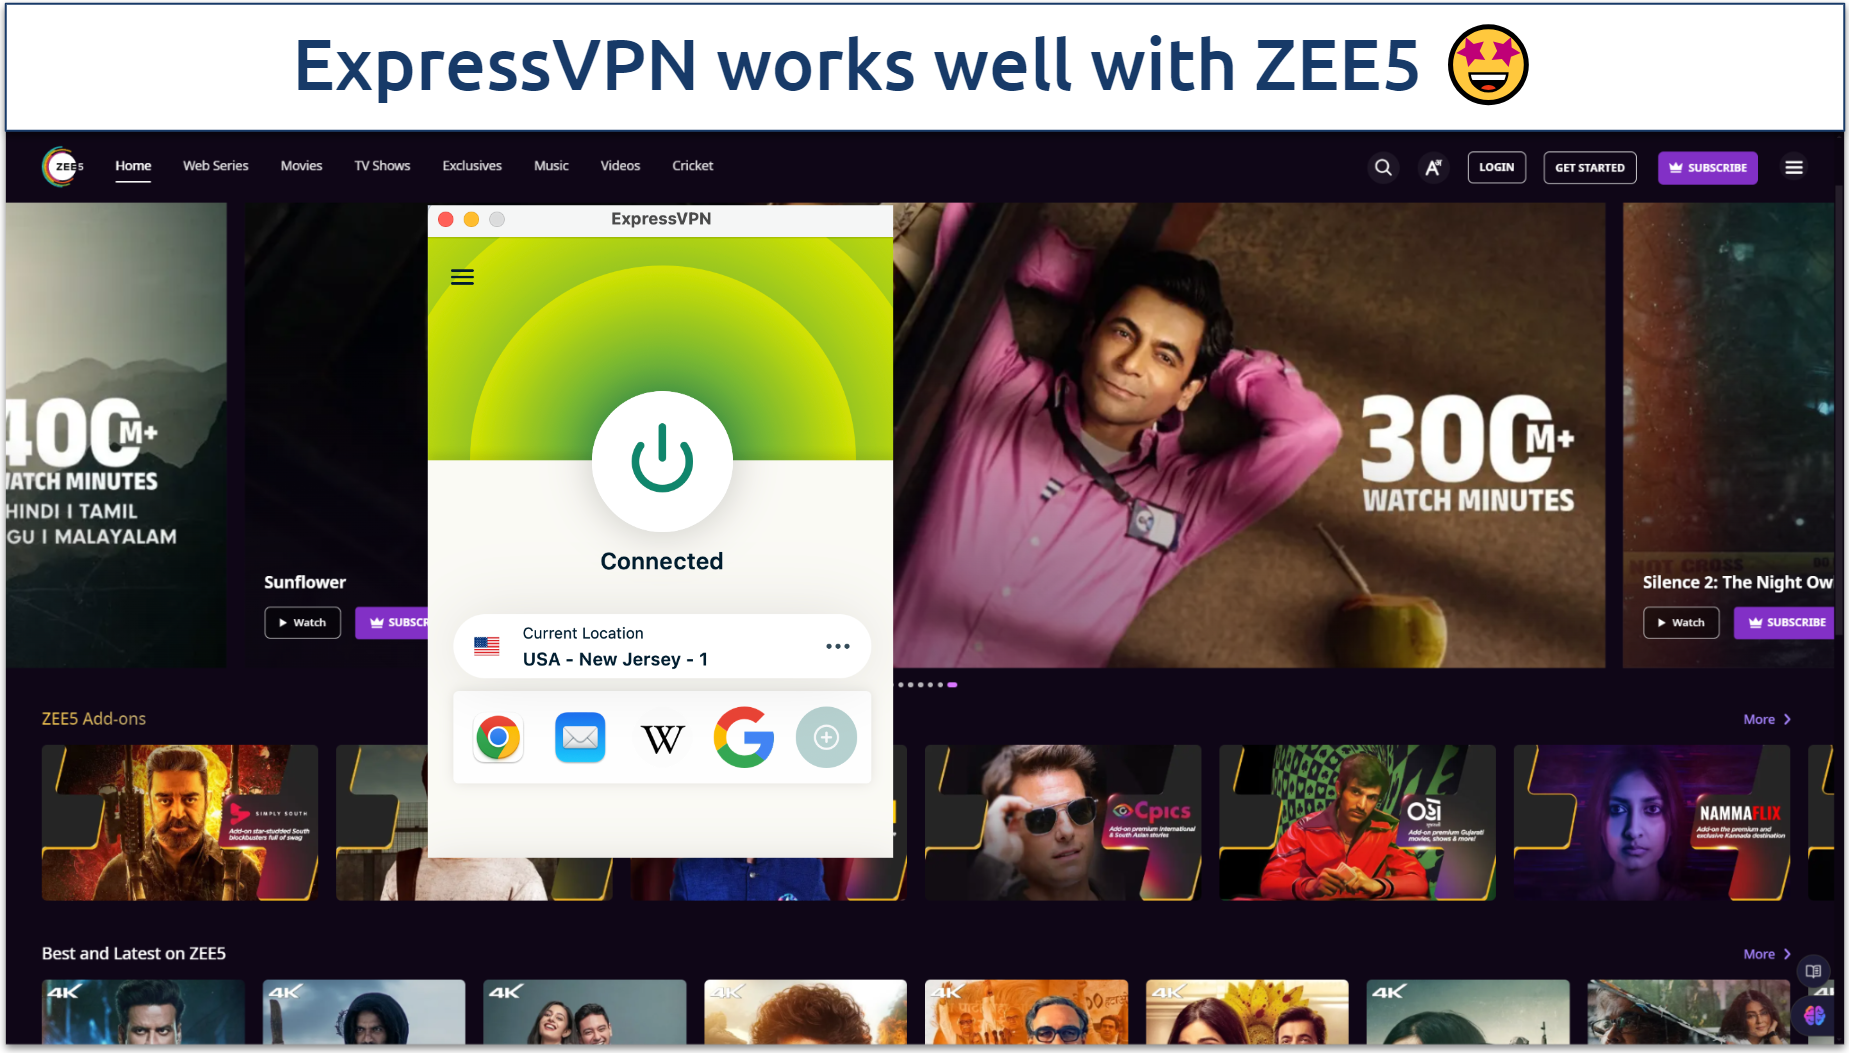 Screenshot of the ZEE5 website with ExpressVPN connected